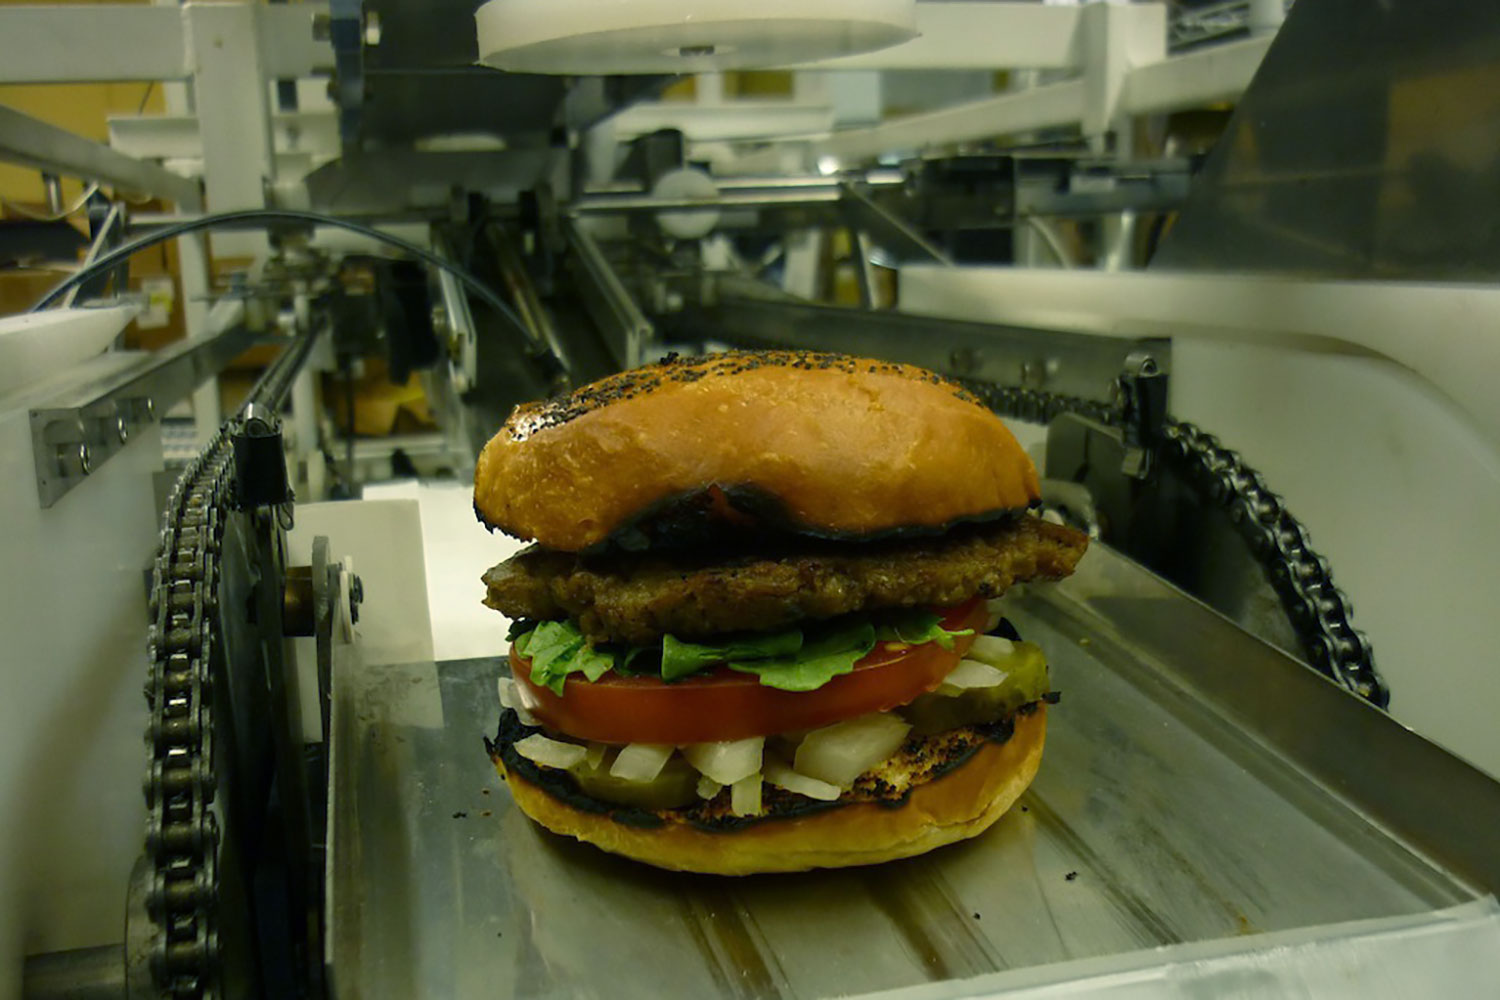 Crean un robot capaz de hacer una hamburguesa cada diez segundos